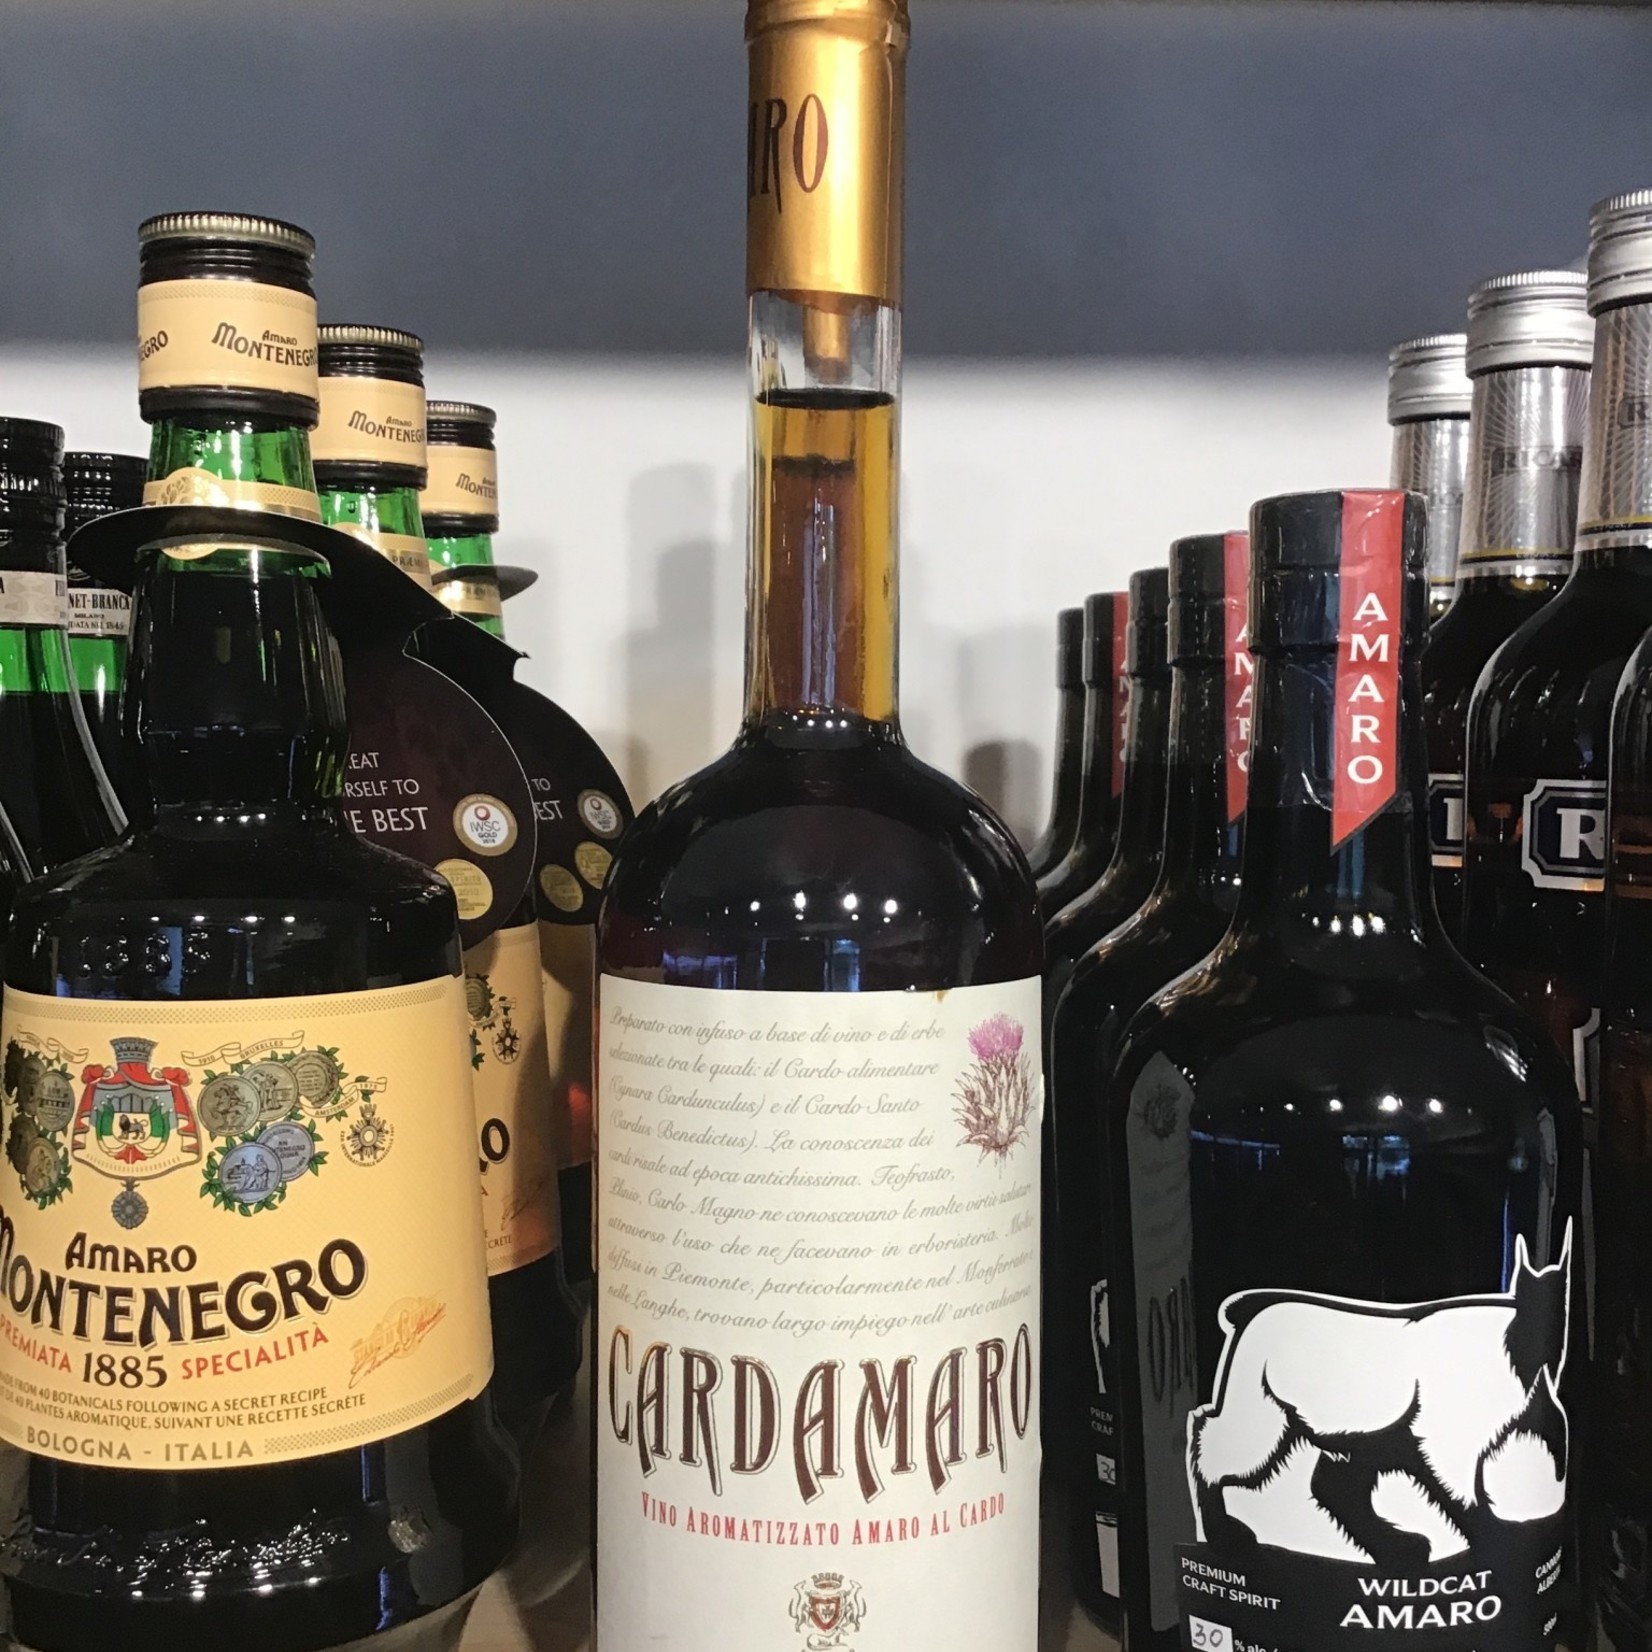 Cardamaro CardAmaro, Vino Aromatizzato Amaro 750ml 17.0%